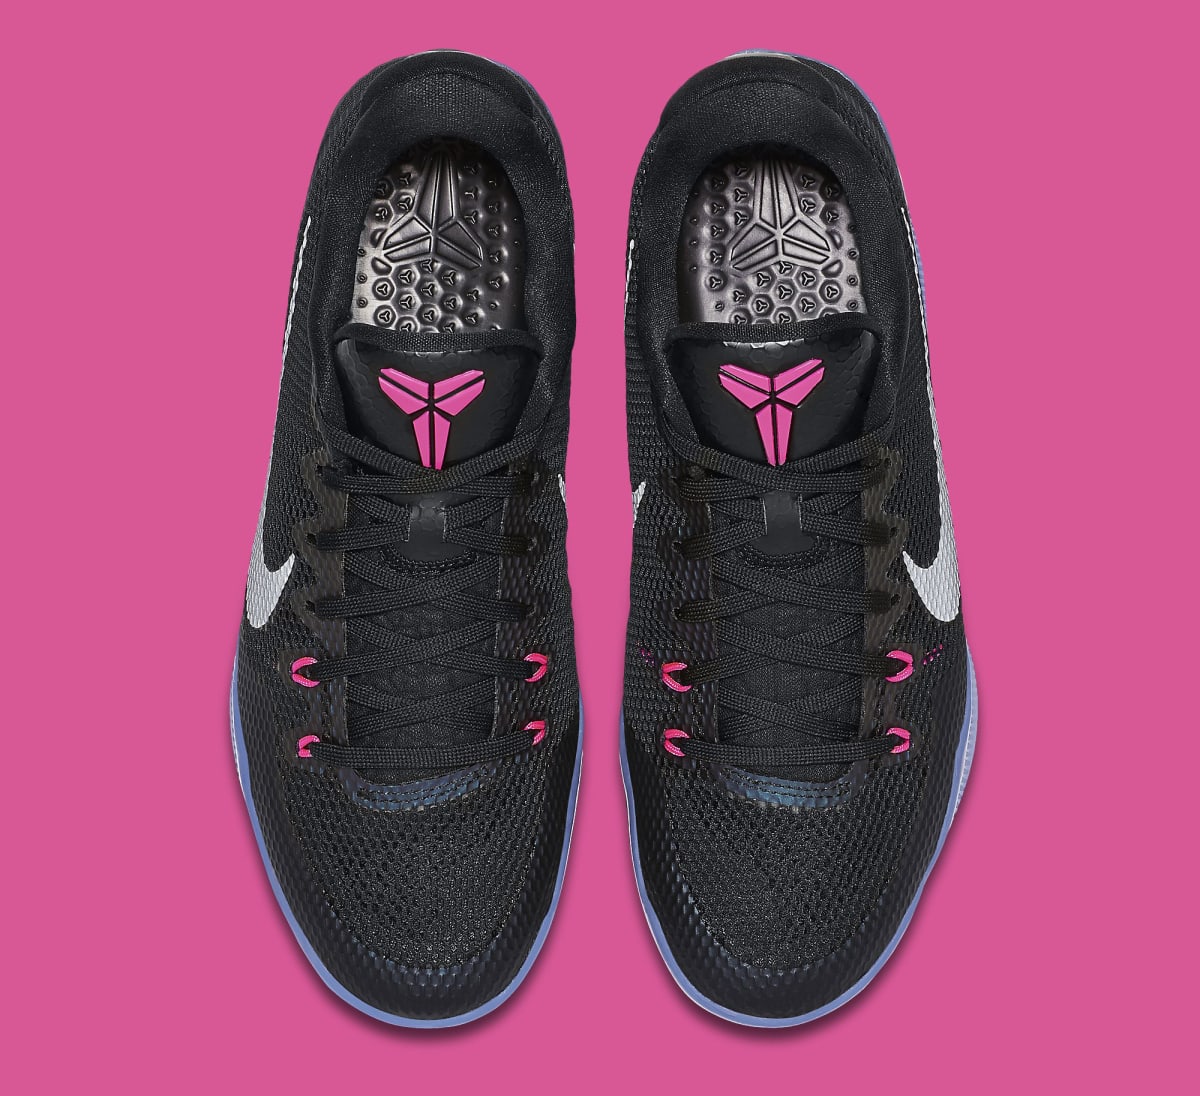 construir Marquesina si puedes Nike Kobe 11 Black Pink 836184-005 | Sole Collector